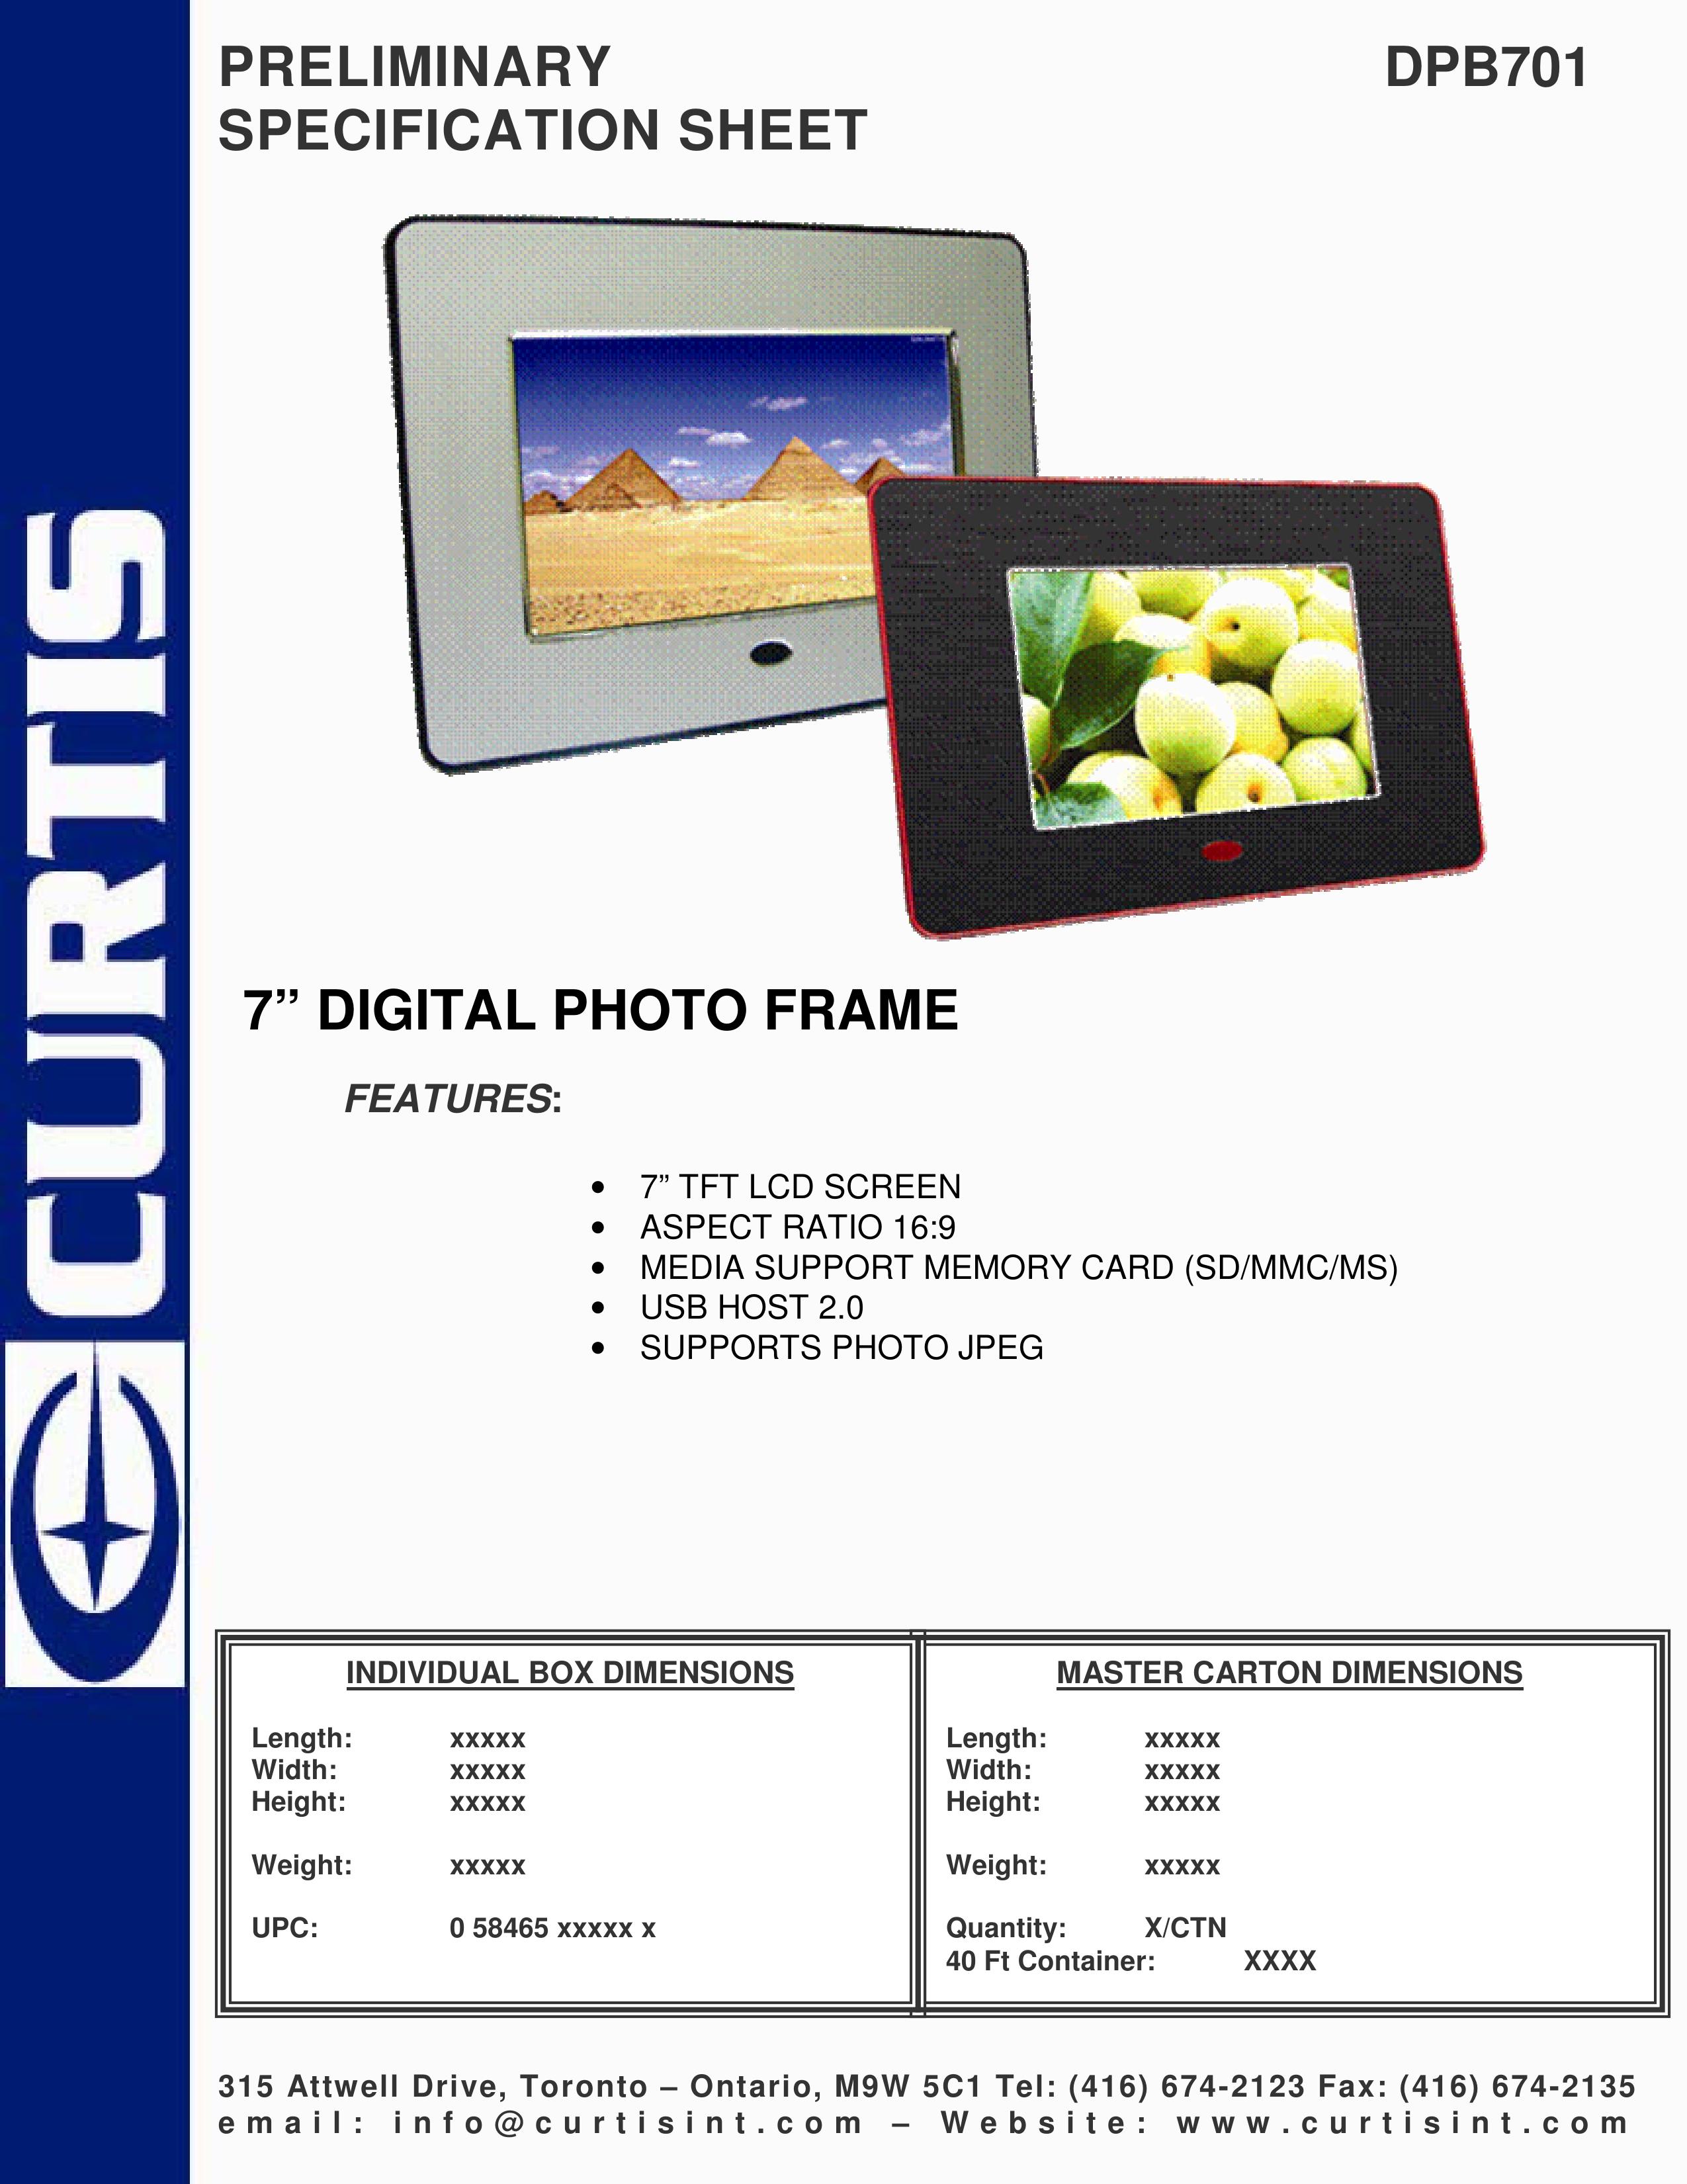 Curtis DPB701 Digital Photo Frame User Manual